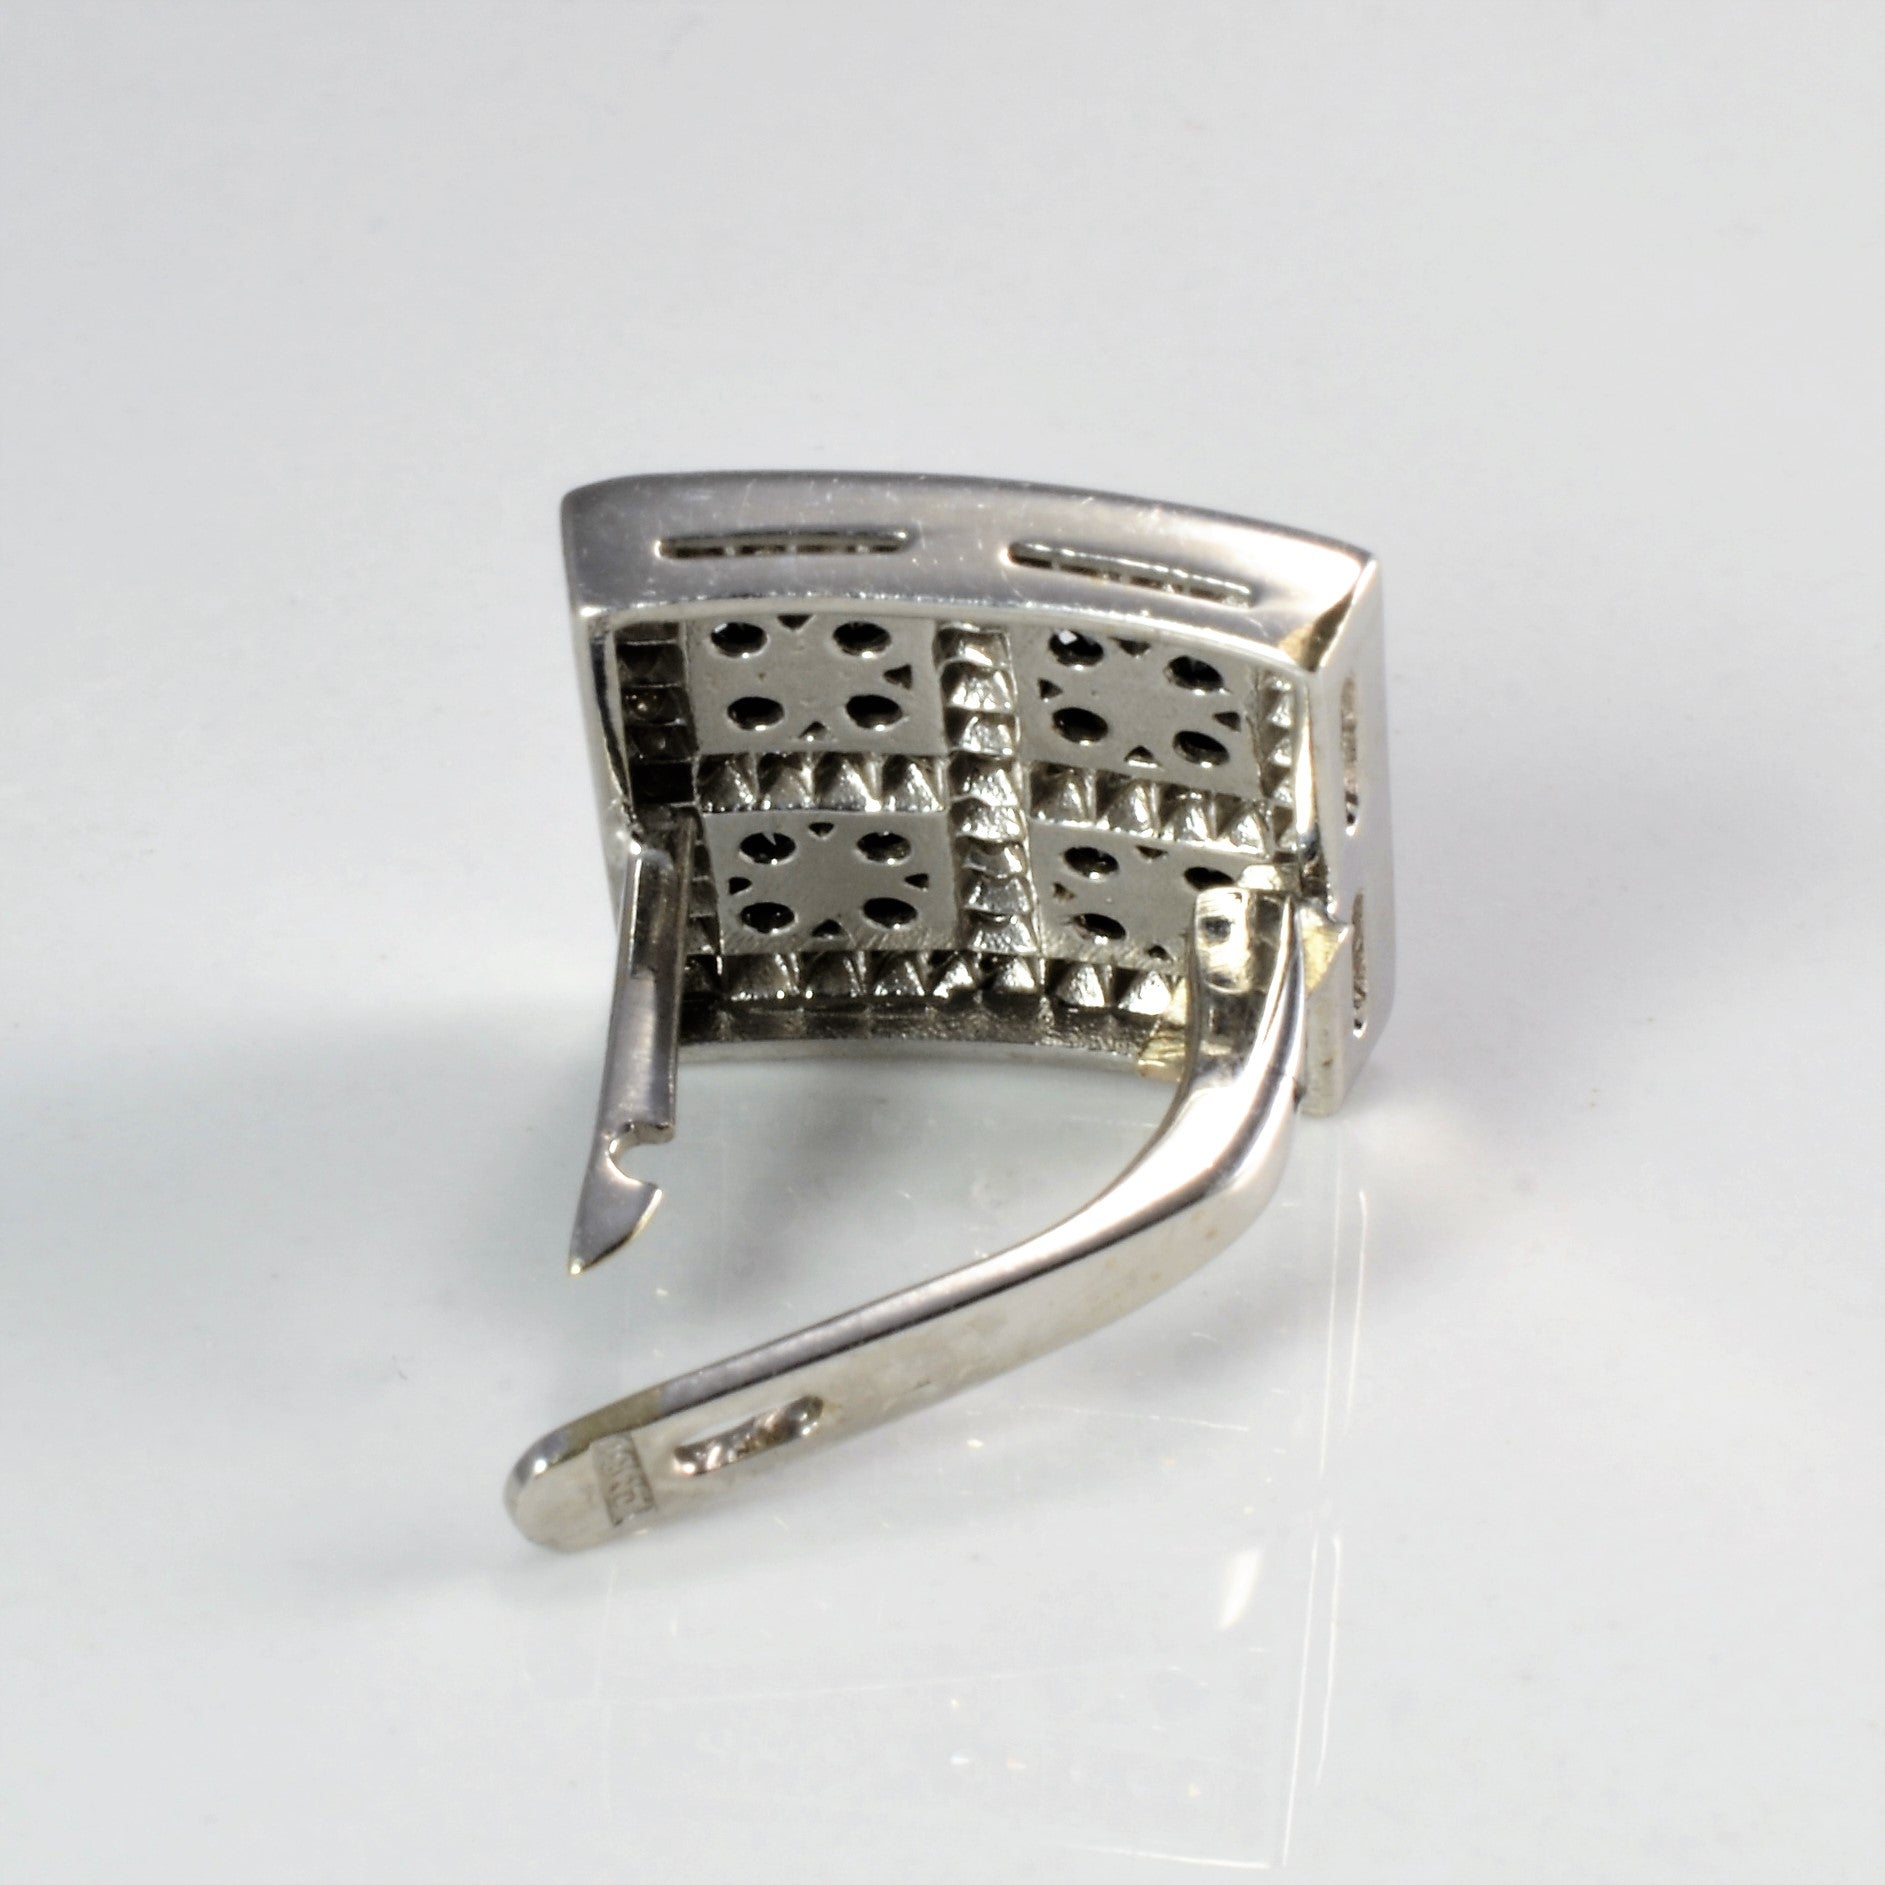 Cluster Set Diamond Earrings | 1.37 ctw |